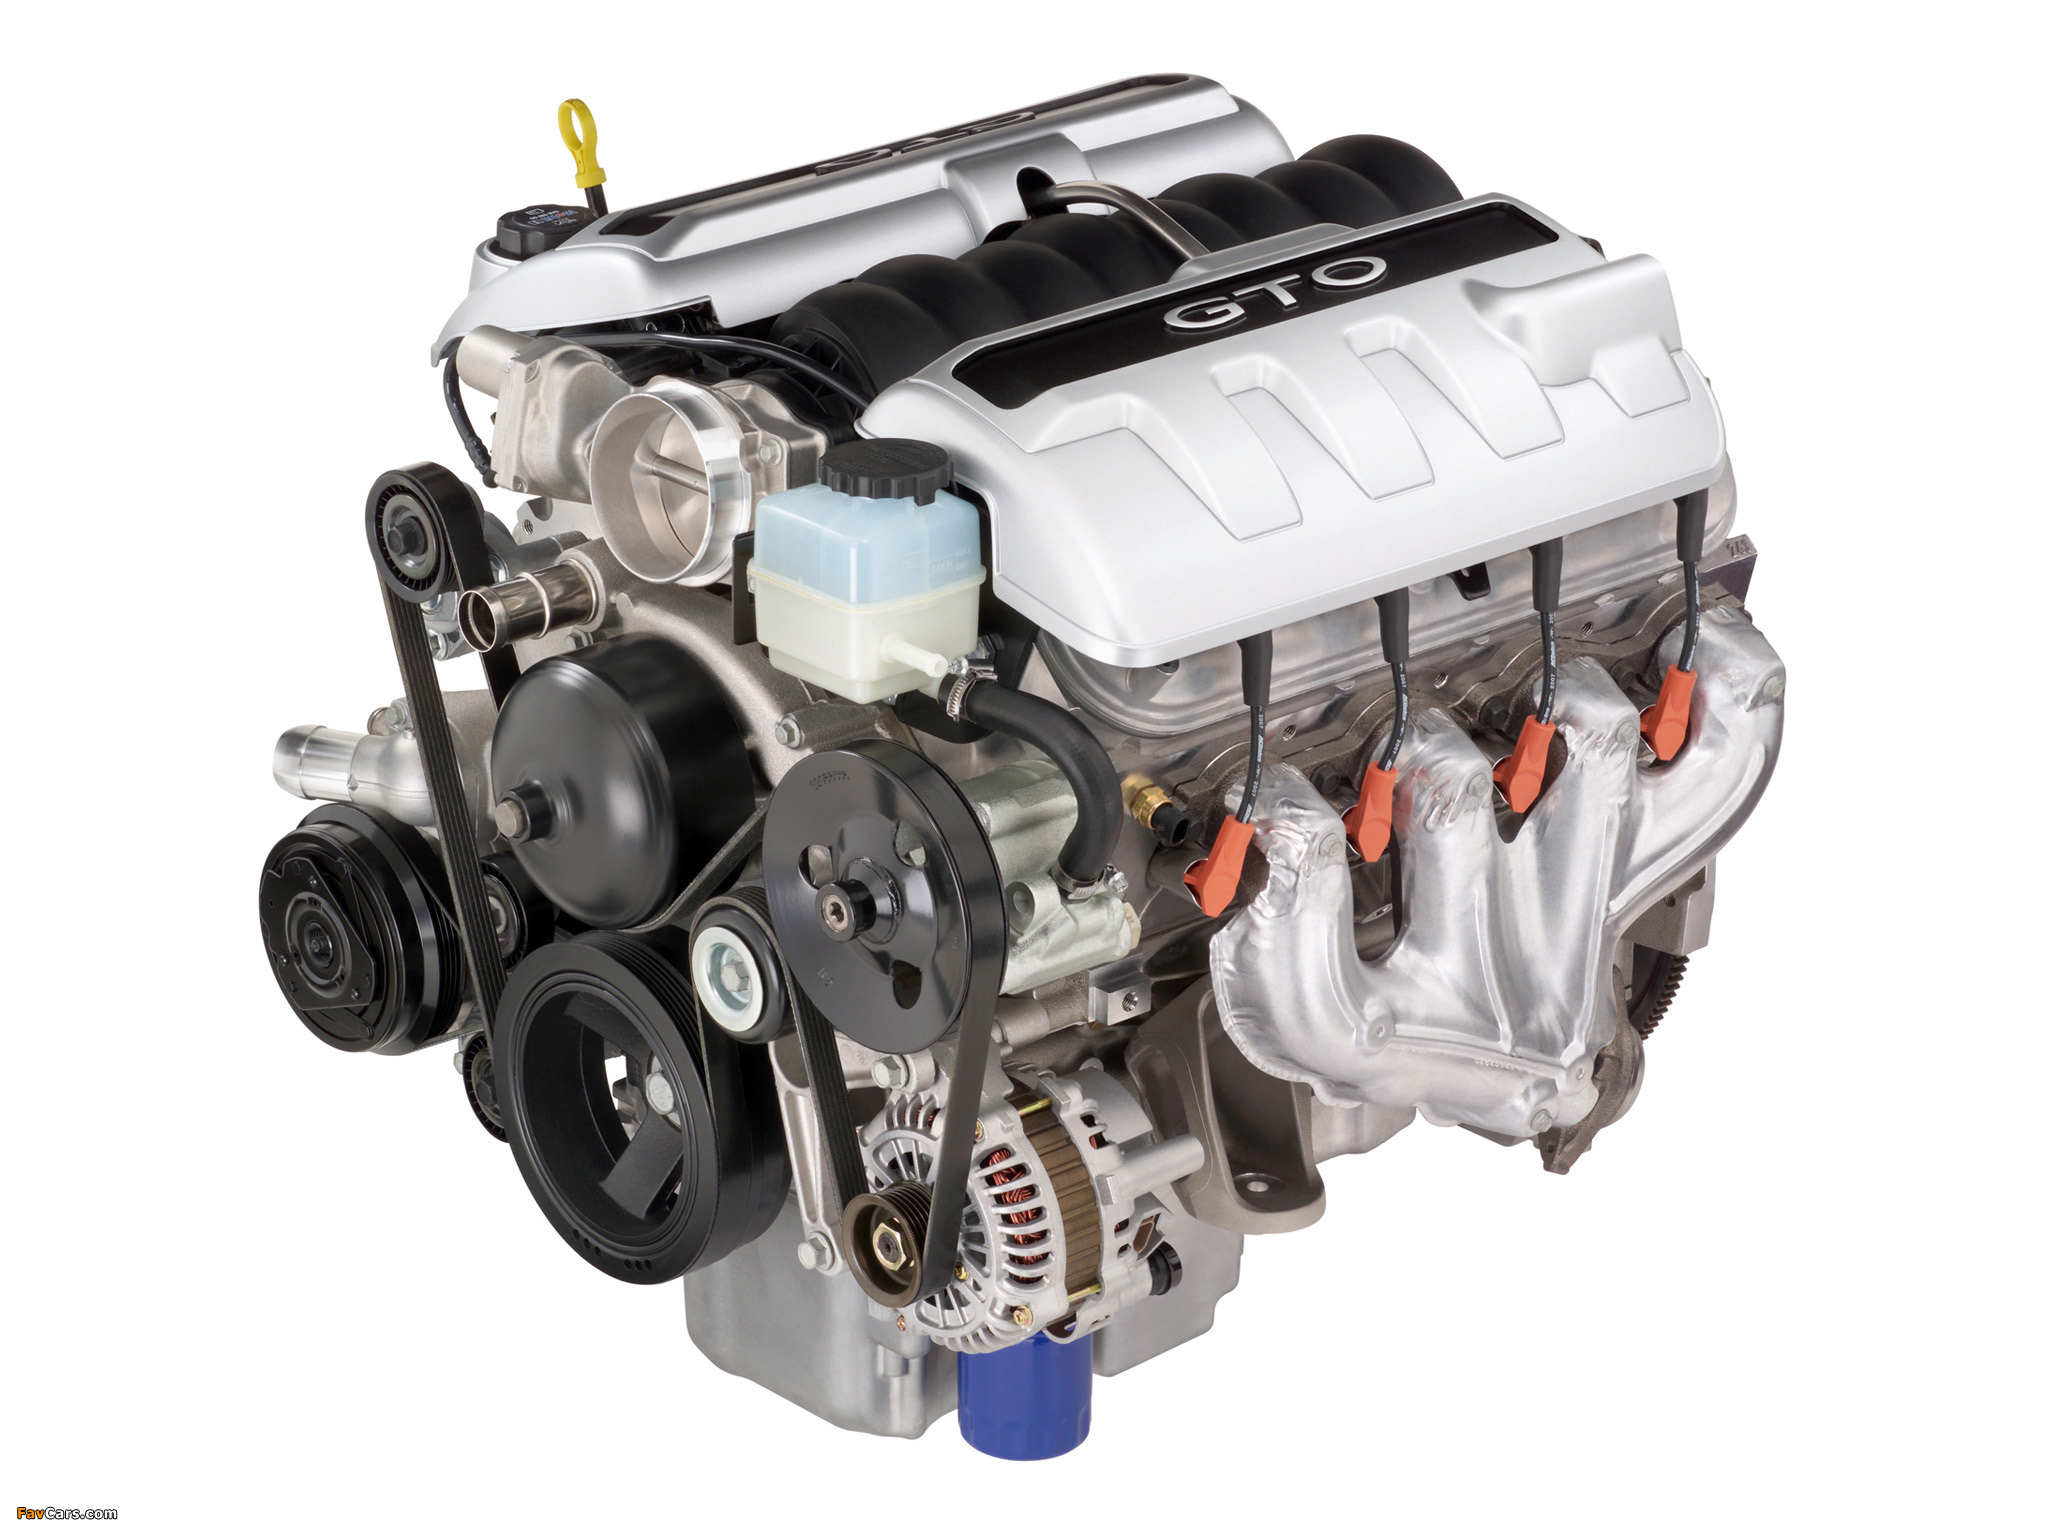 Мотор 150 лс. Chevrolet ls2 двигатель. Двигатель GM Chevrolet l98. Chevrolet 6,2 движок. Chevrolet ls2 engine.